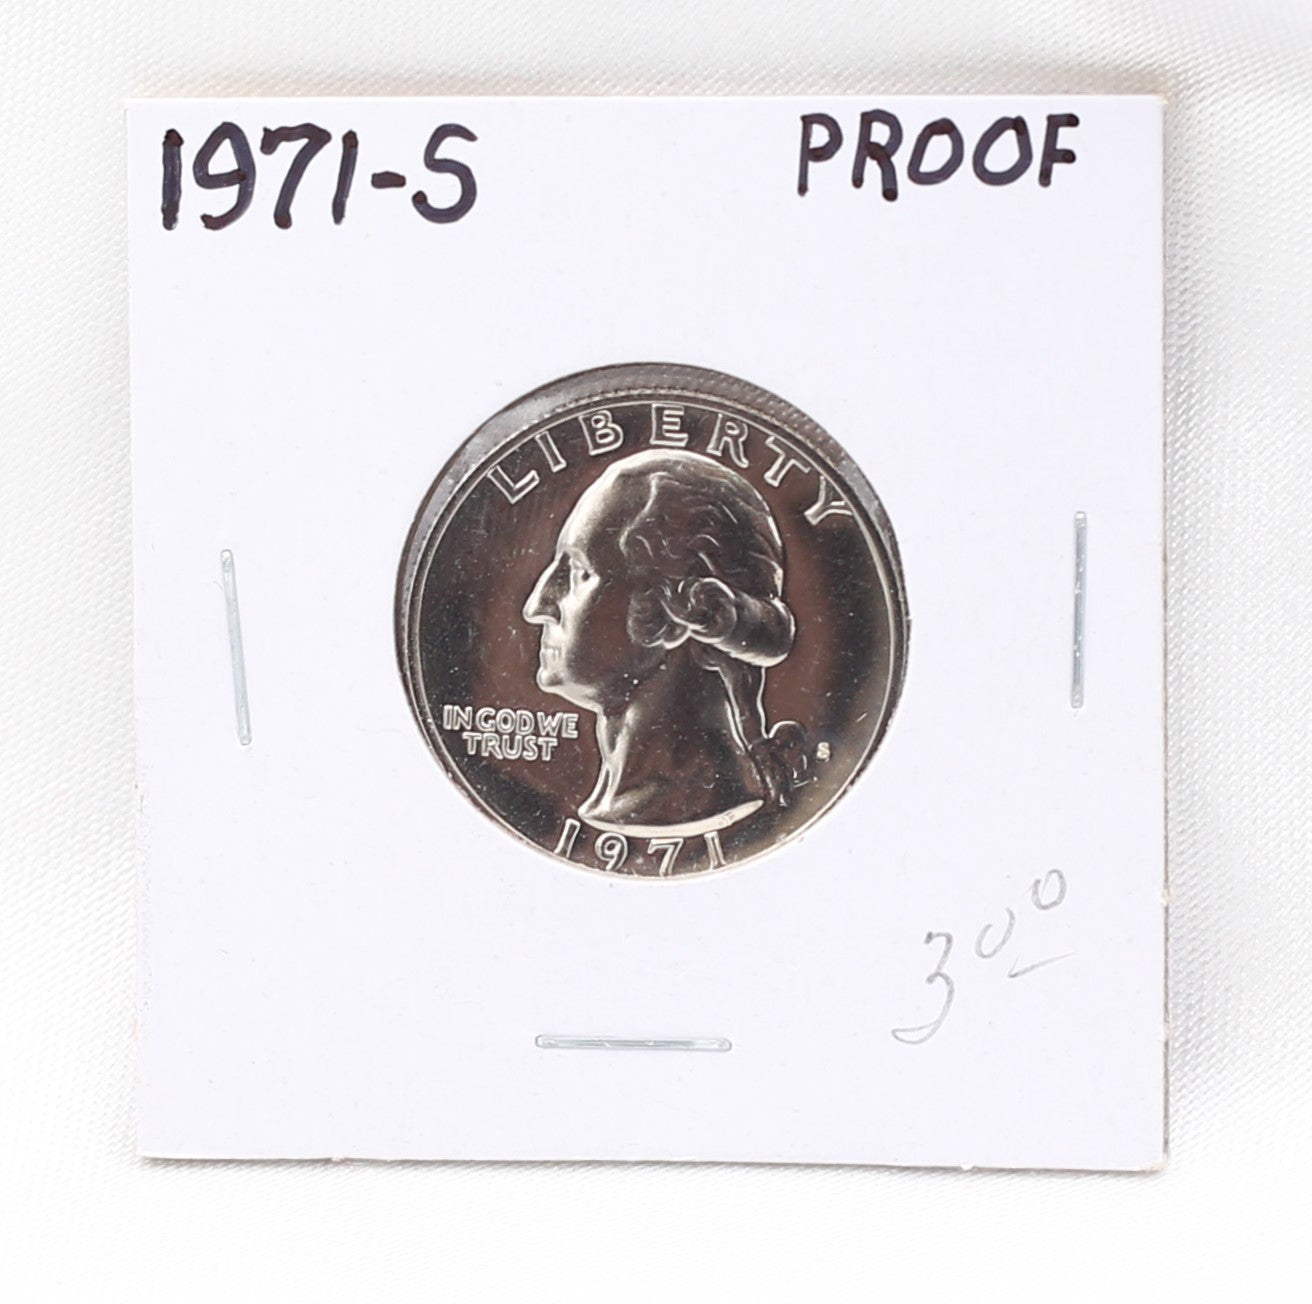 1971-S Proof Silver Quarter